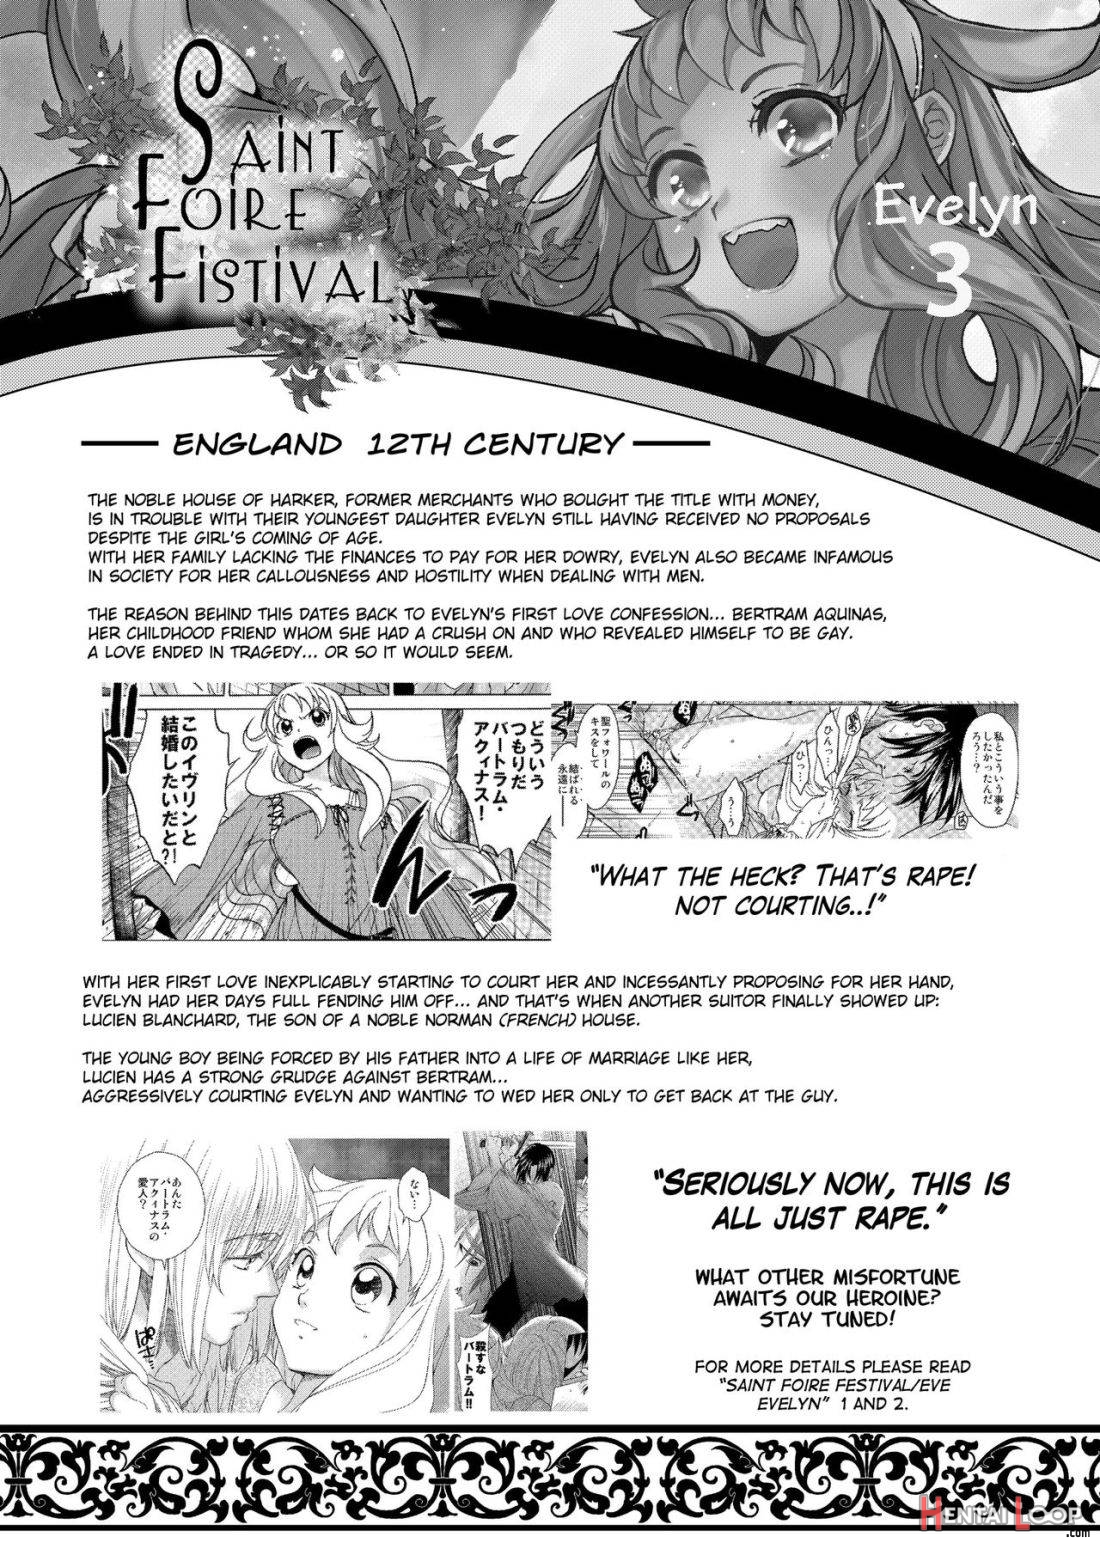 Saint Foire Festival/eve Evelyn:3 page 2